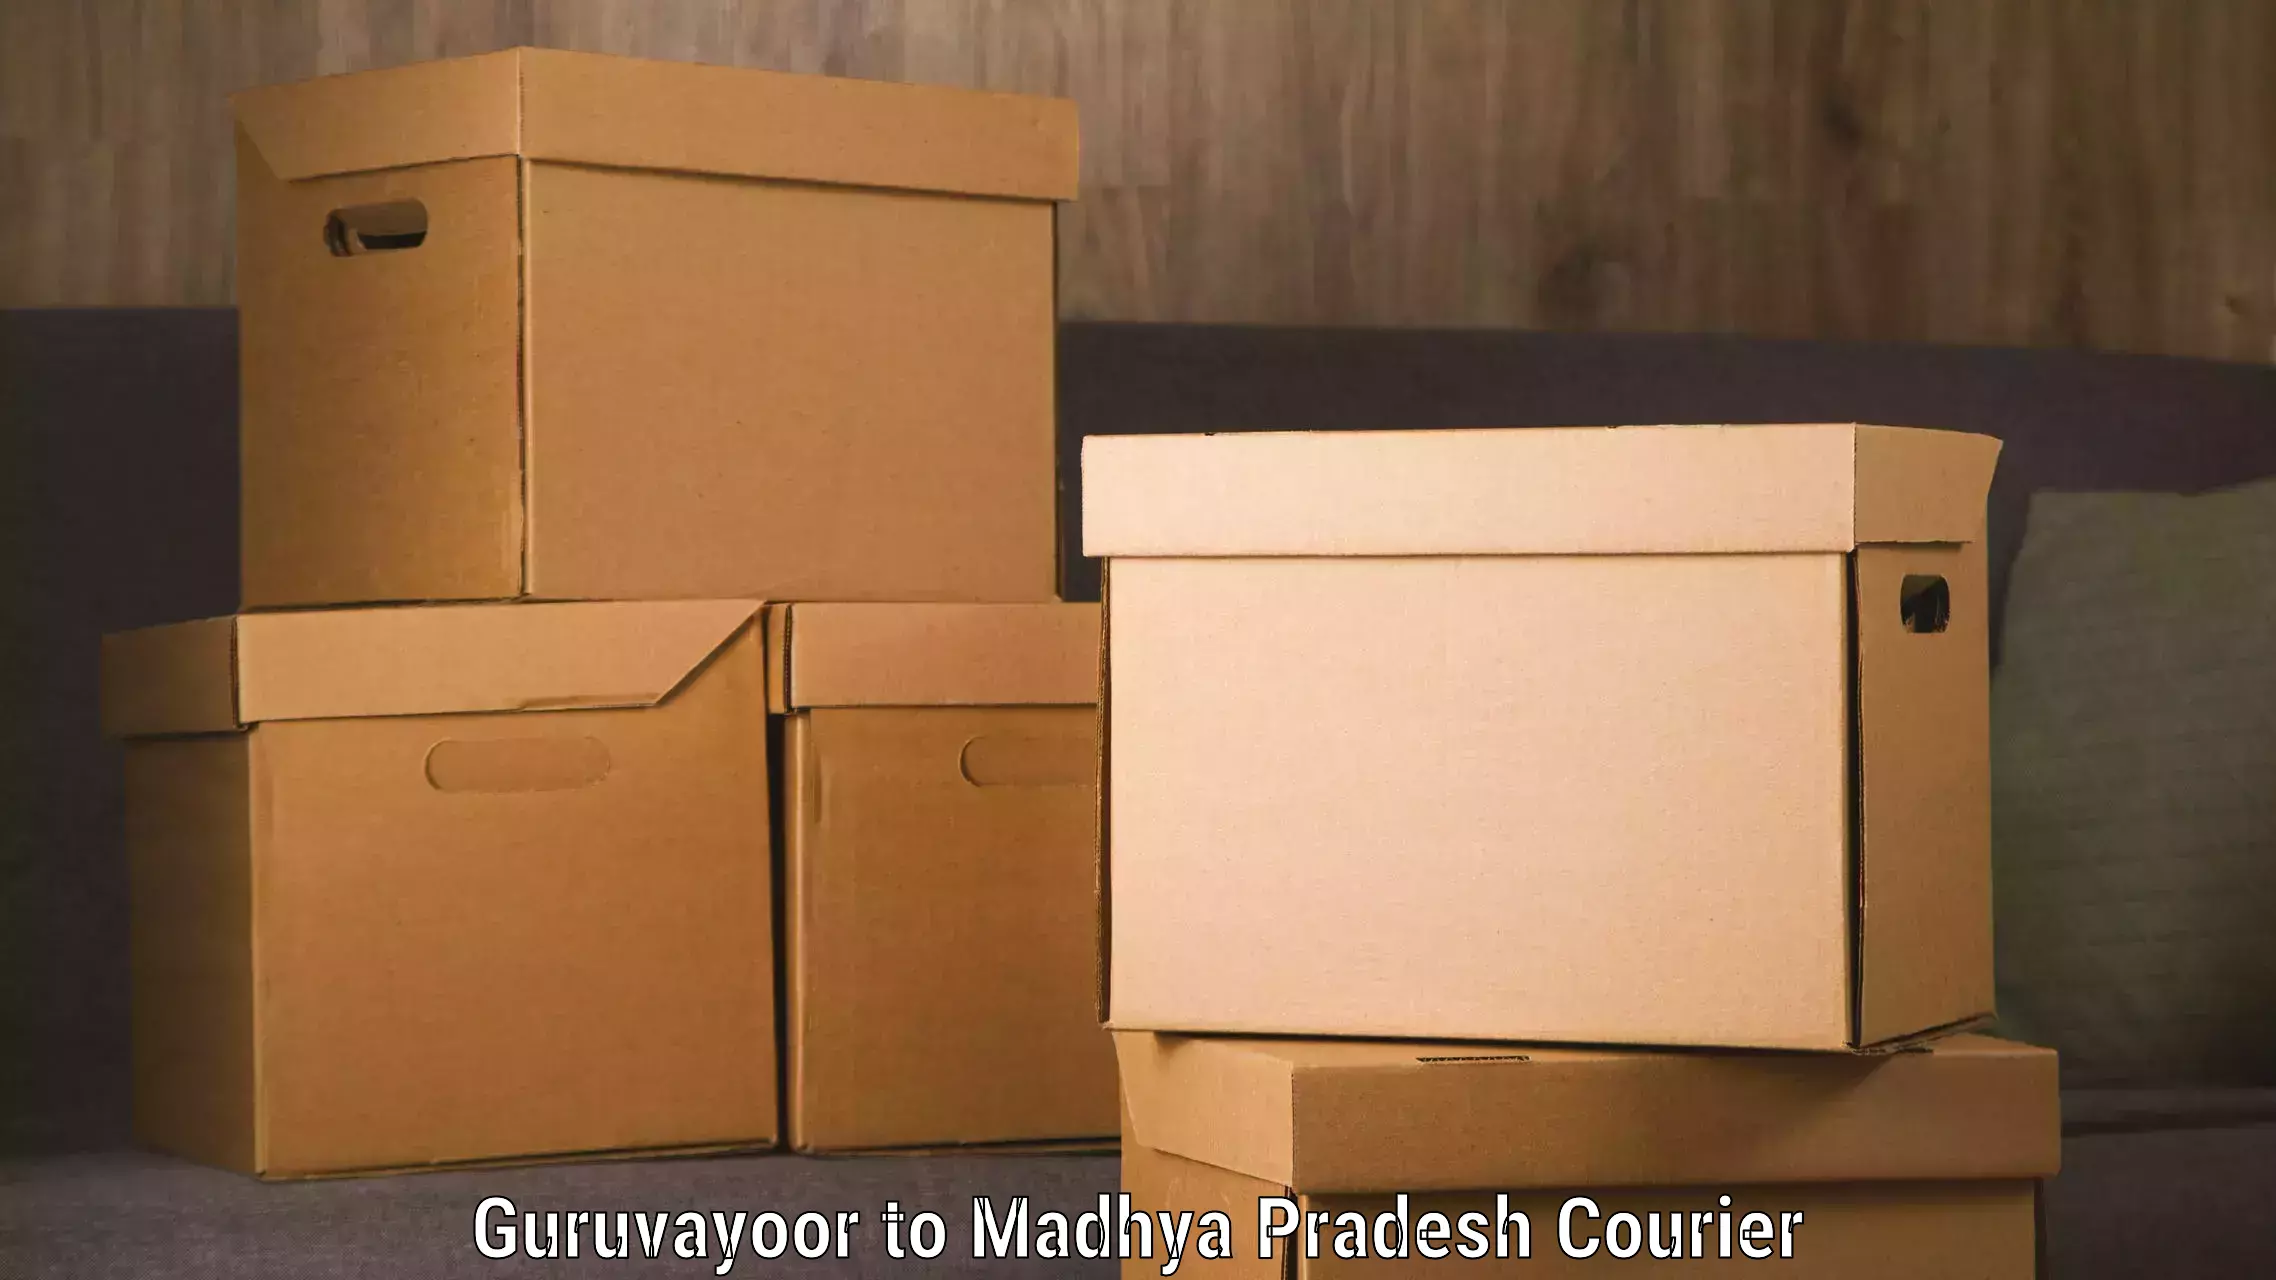 Courier service innovation in Guruvayoor to Rampur Baghelan